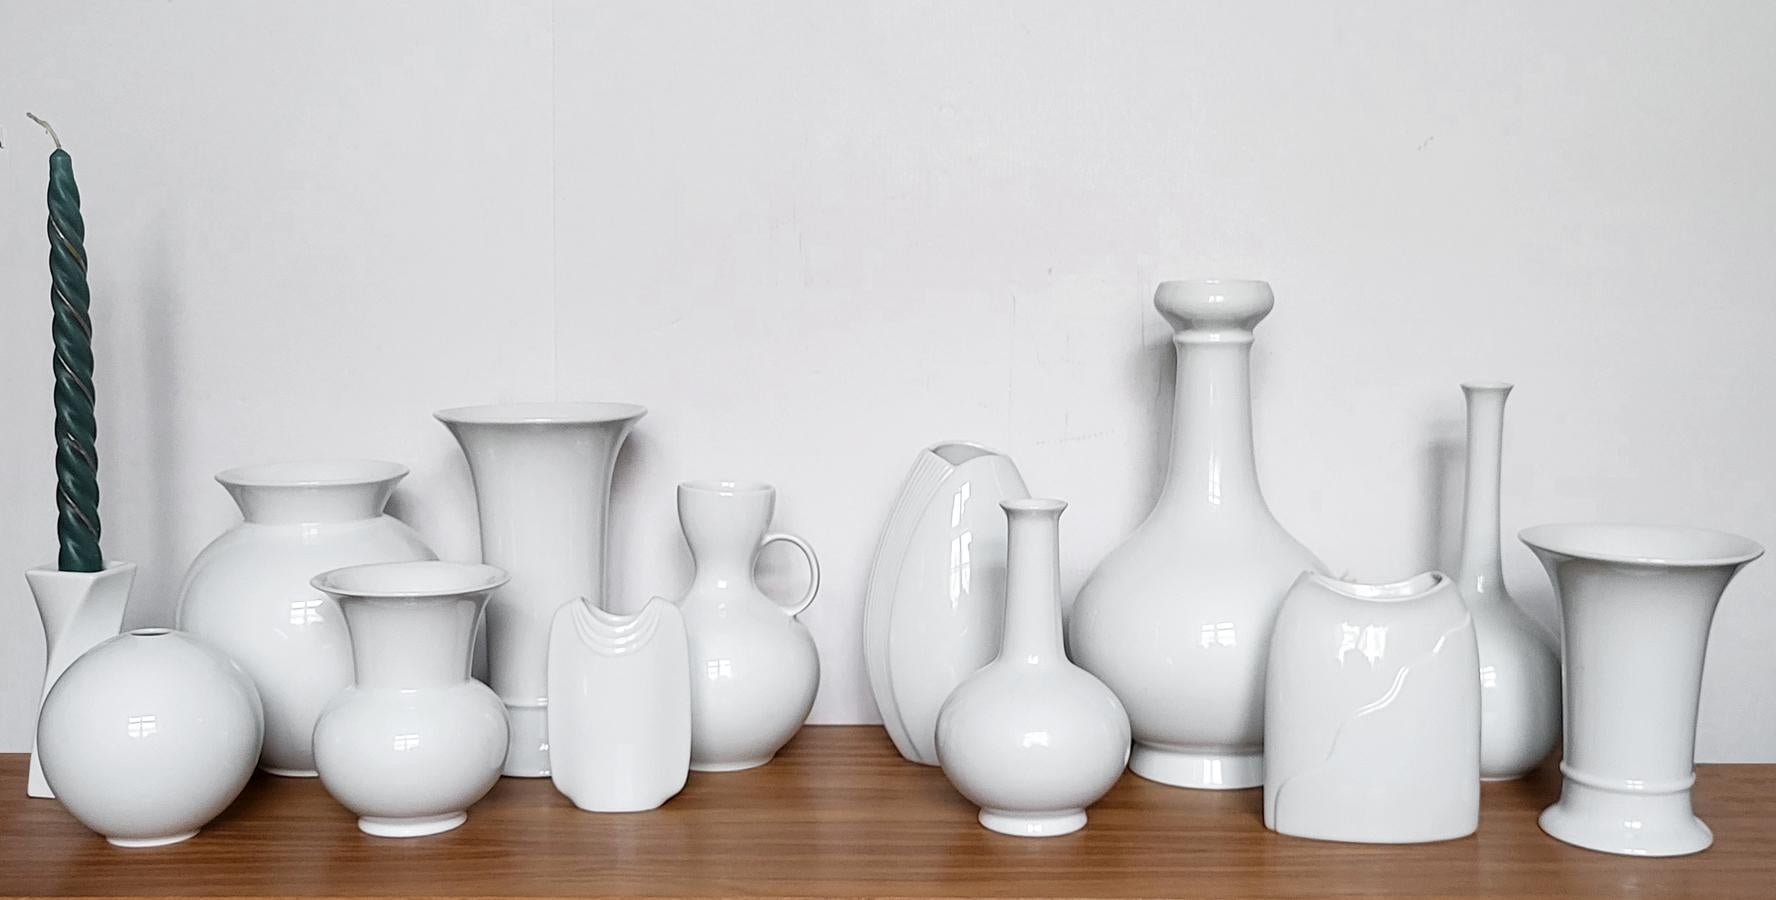 Set of 12 beautiful midcentury minimalis white polished/glazed porcelain vases and one candle holder.
Germany, 1950s-1980s.

Price for a set!
 